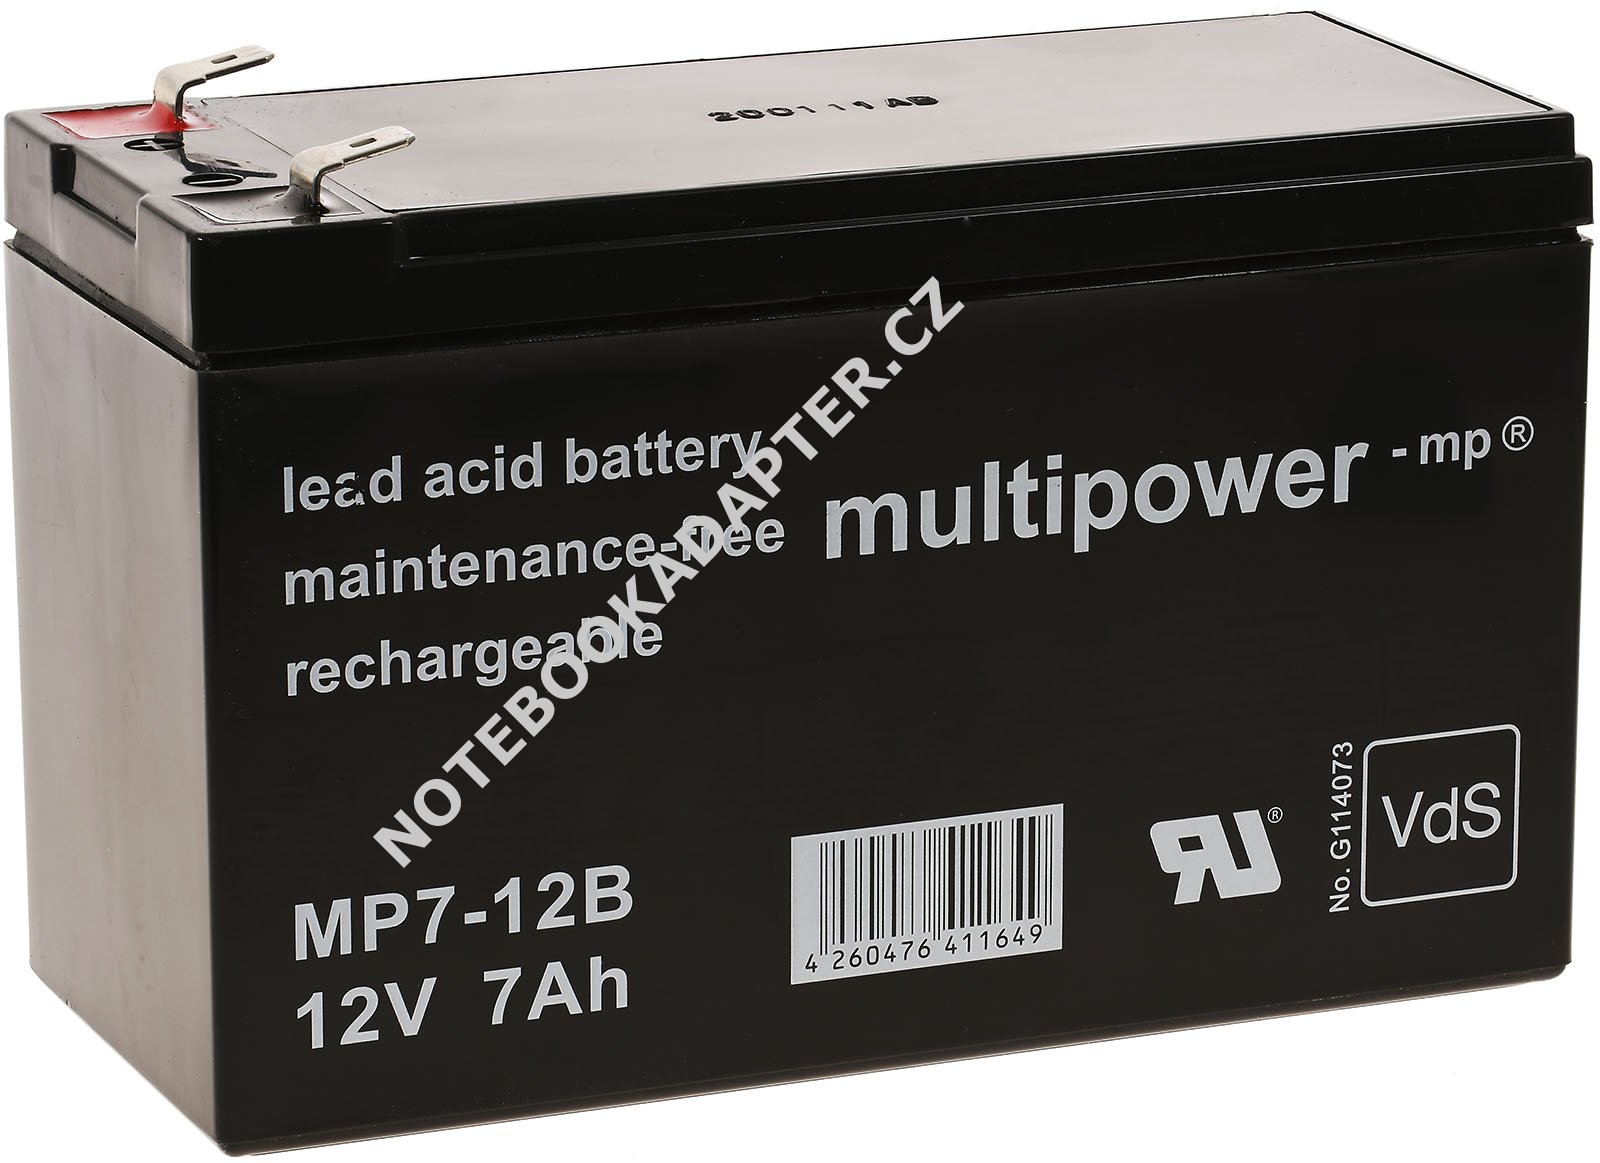 Olověná baterie UPS APC Back-UPS CS 500 - Multipower